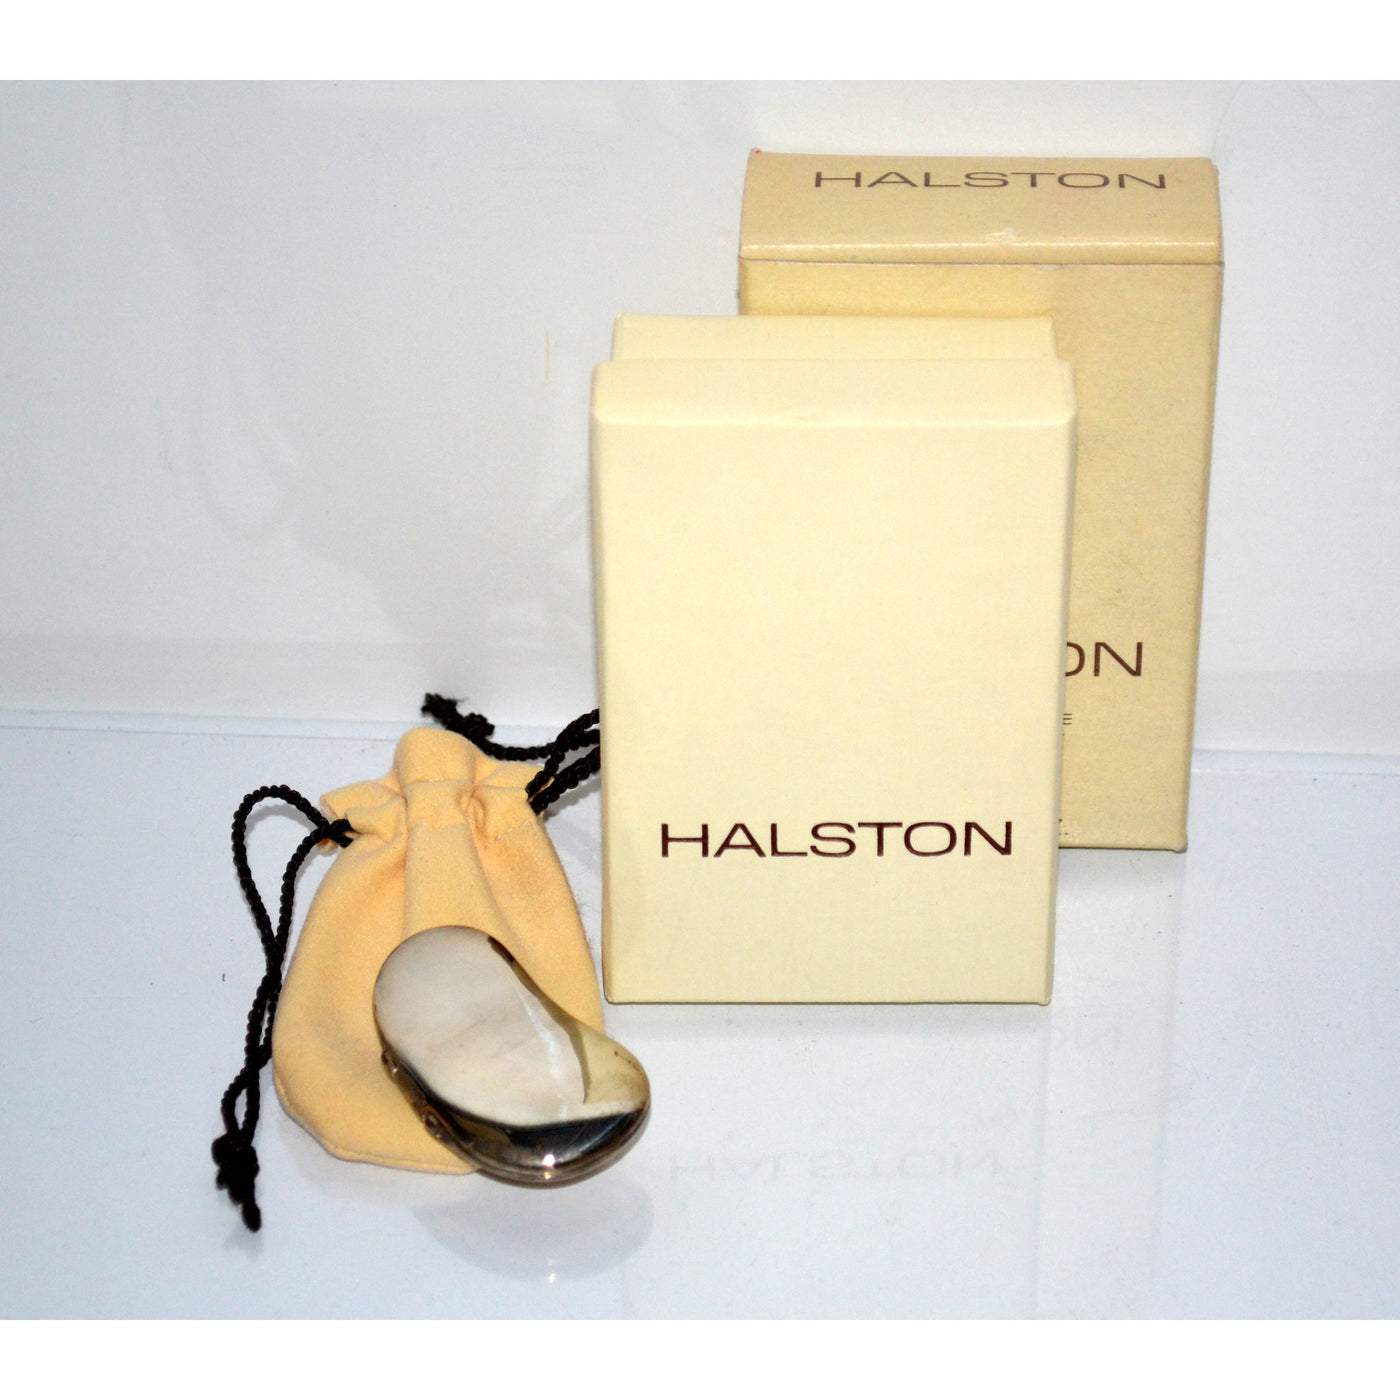 Vintage Halston Creme Perfume Elsa Peretti Compact